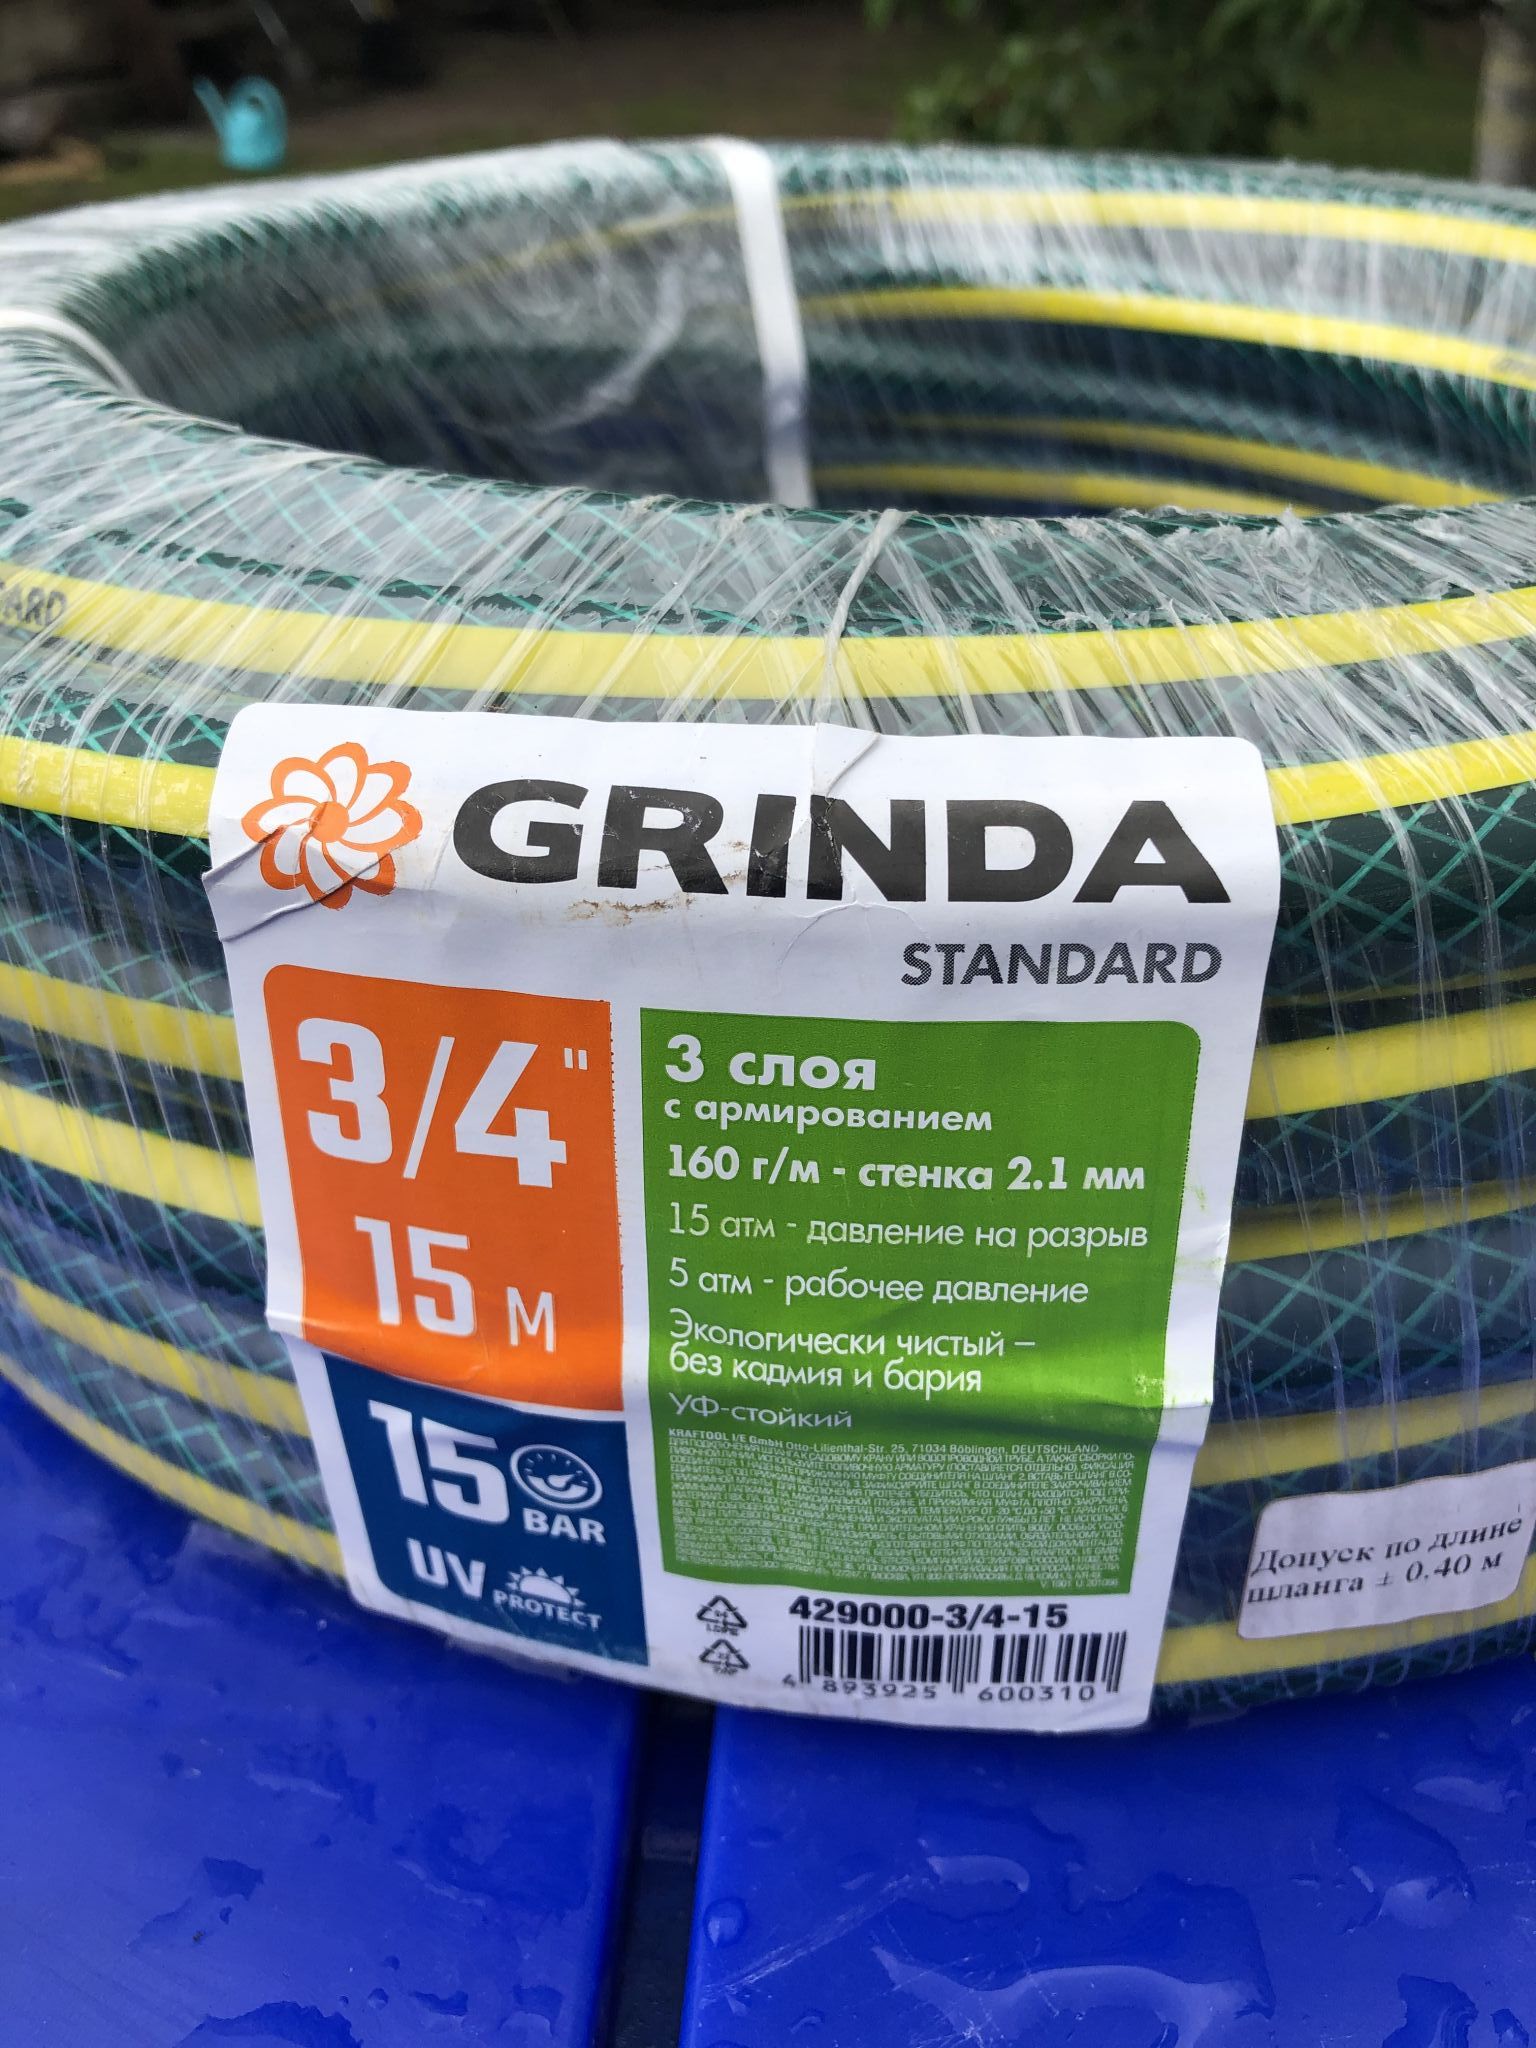 Grinda 3 4 50 м. Grinda шланг 3/4 25 метров. Шланг d3/4*25 м Grinda Standard 429000-3/4-25. Шланг поливочный Standard (3-х слойный, 10 атм, 1”). Шланг d1/2*15 м Grinda Standard 429000-1/2-15.